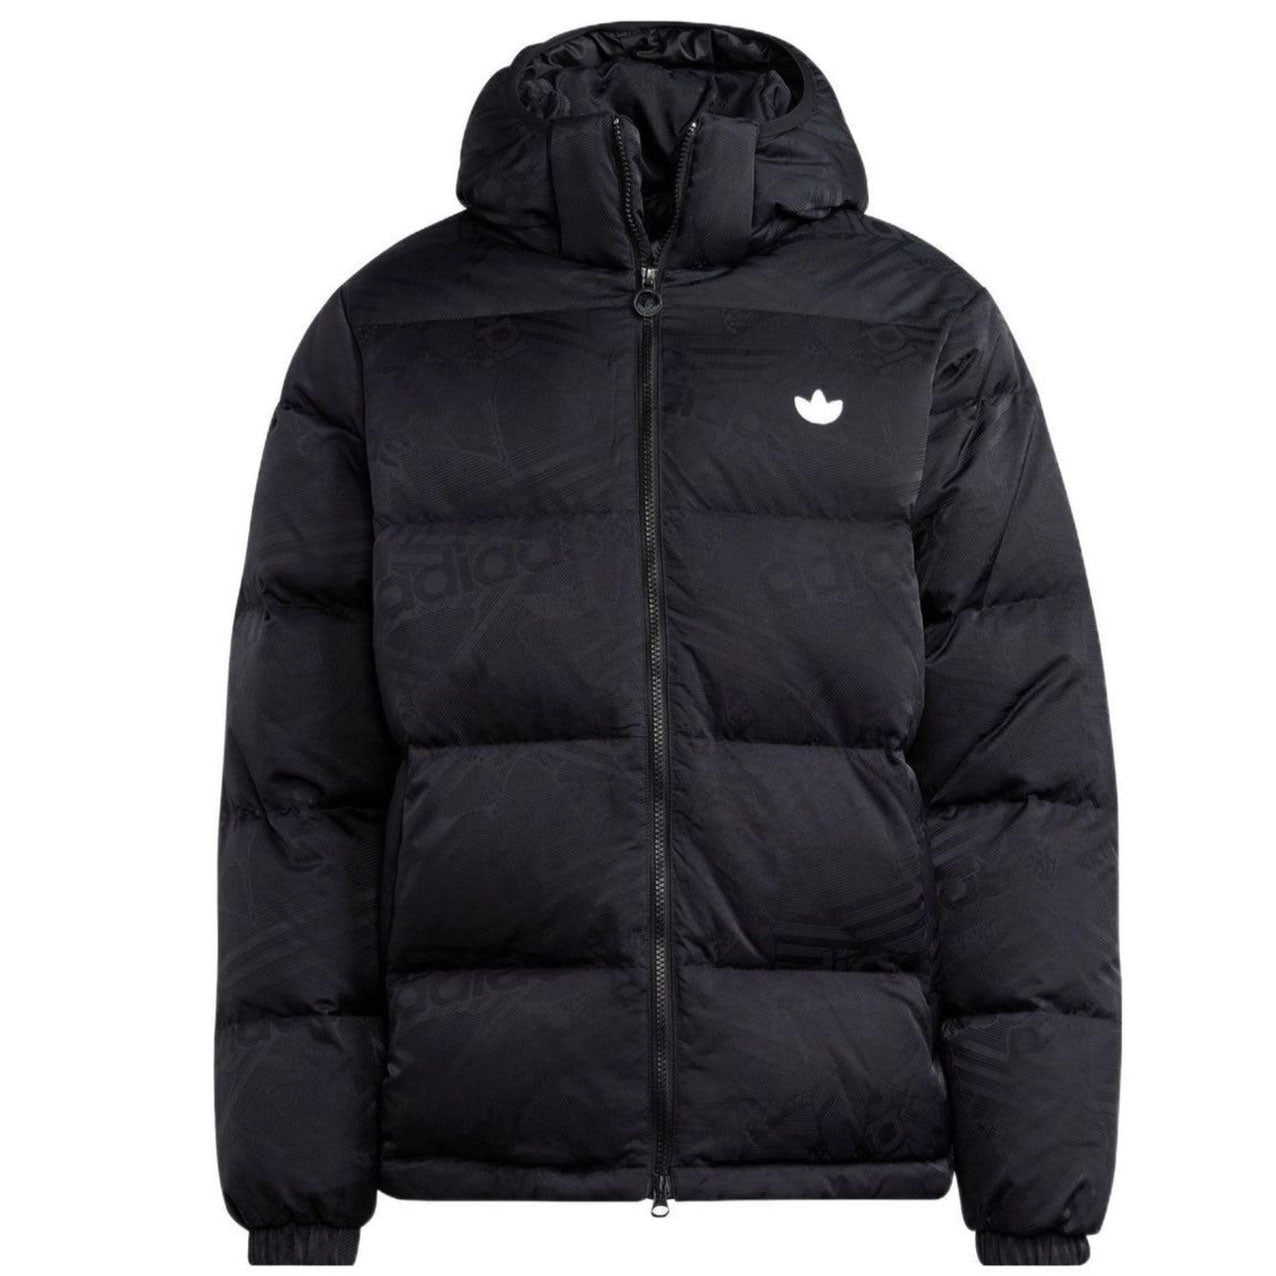 Adidas Mens Jacket Black Hooded Puffer Jacket Long Sleeve Full Zip Jacket - MRGOUTLETS